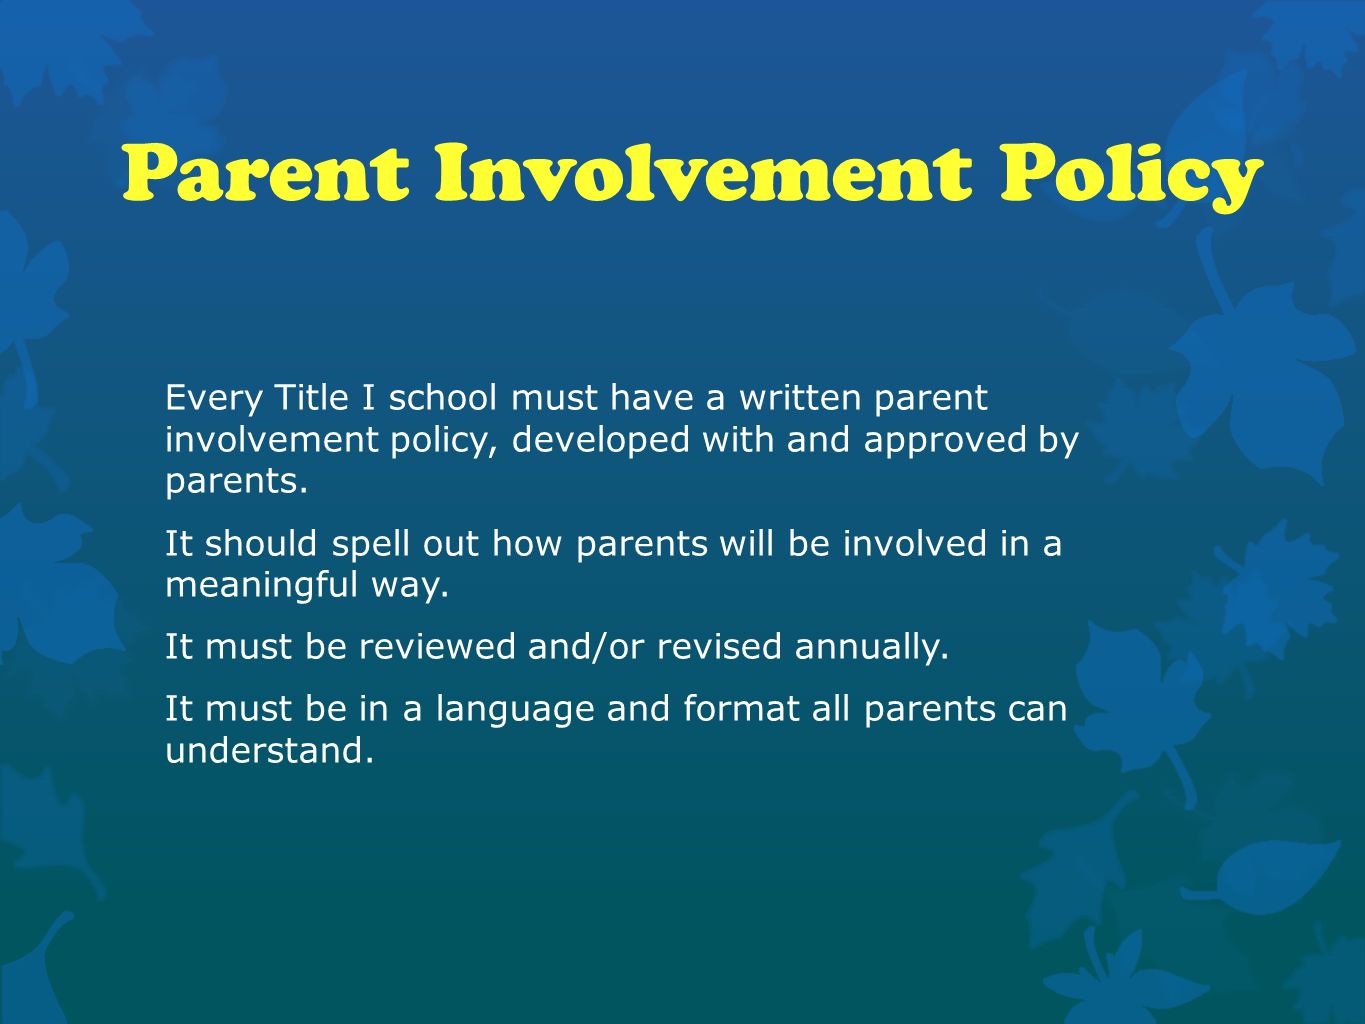 Parent Involvement Policy